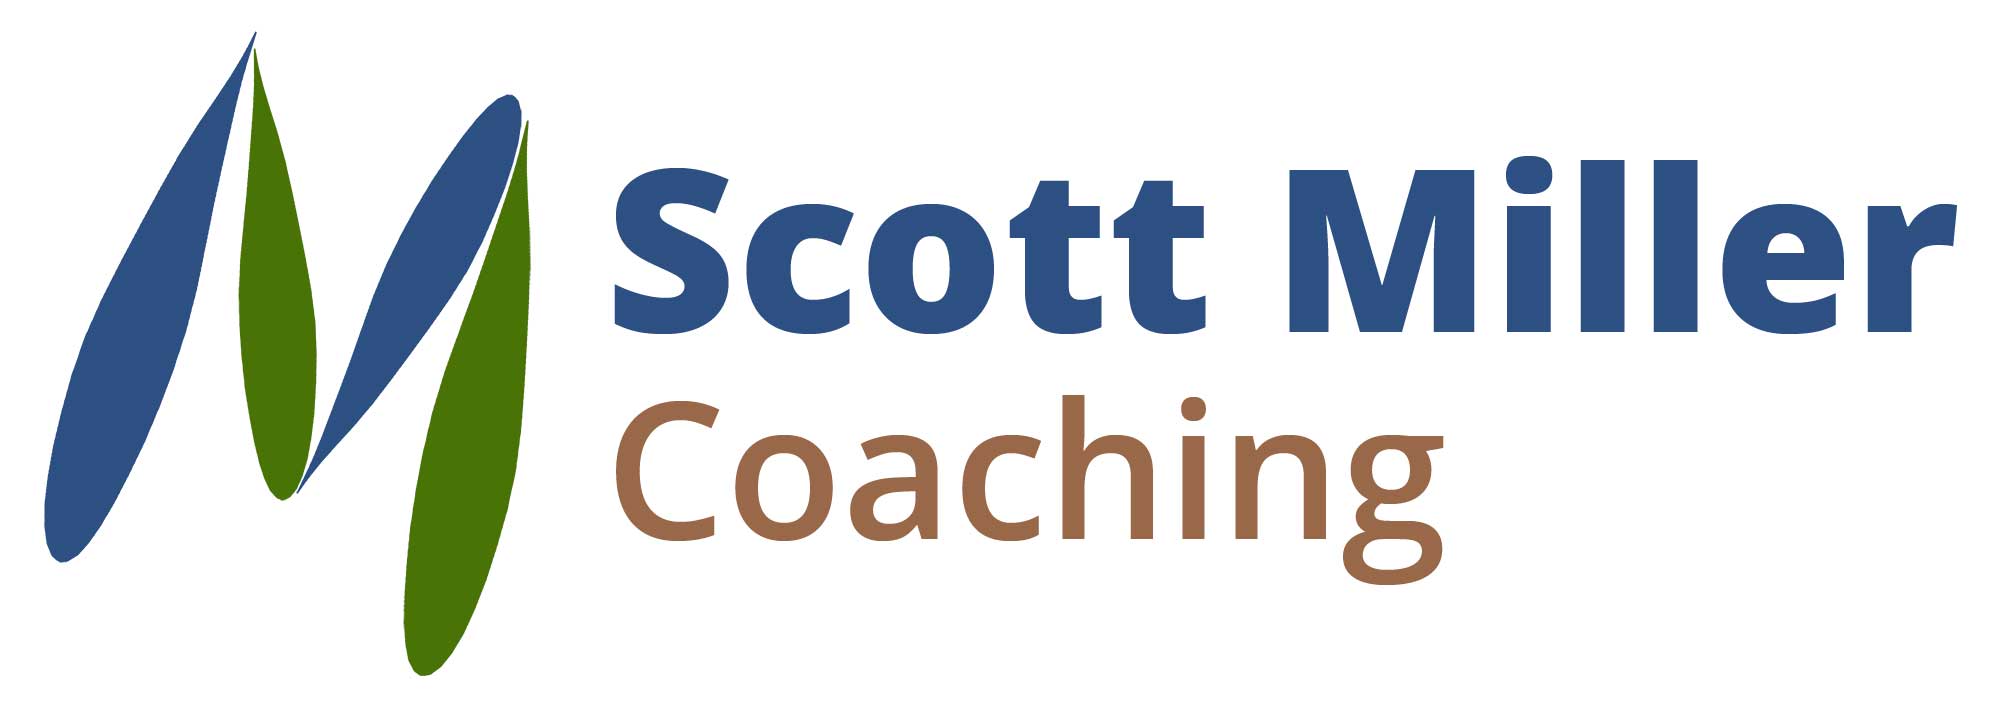 Scott Miller Coaching